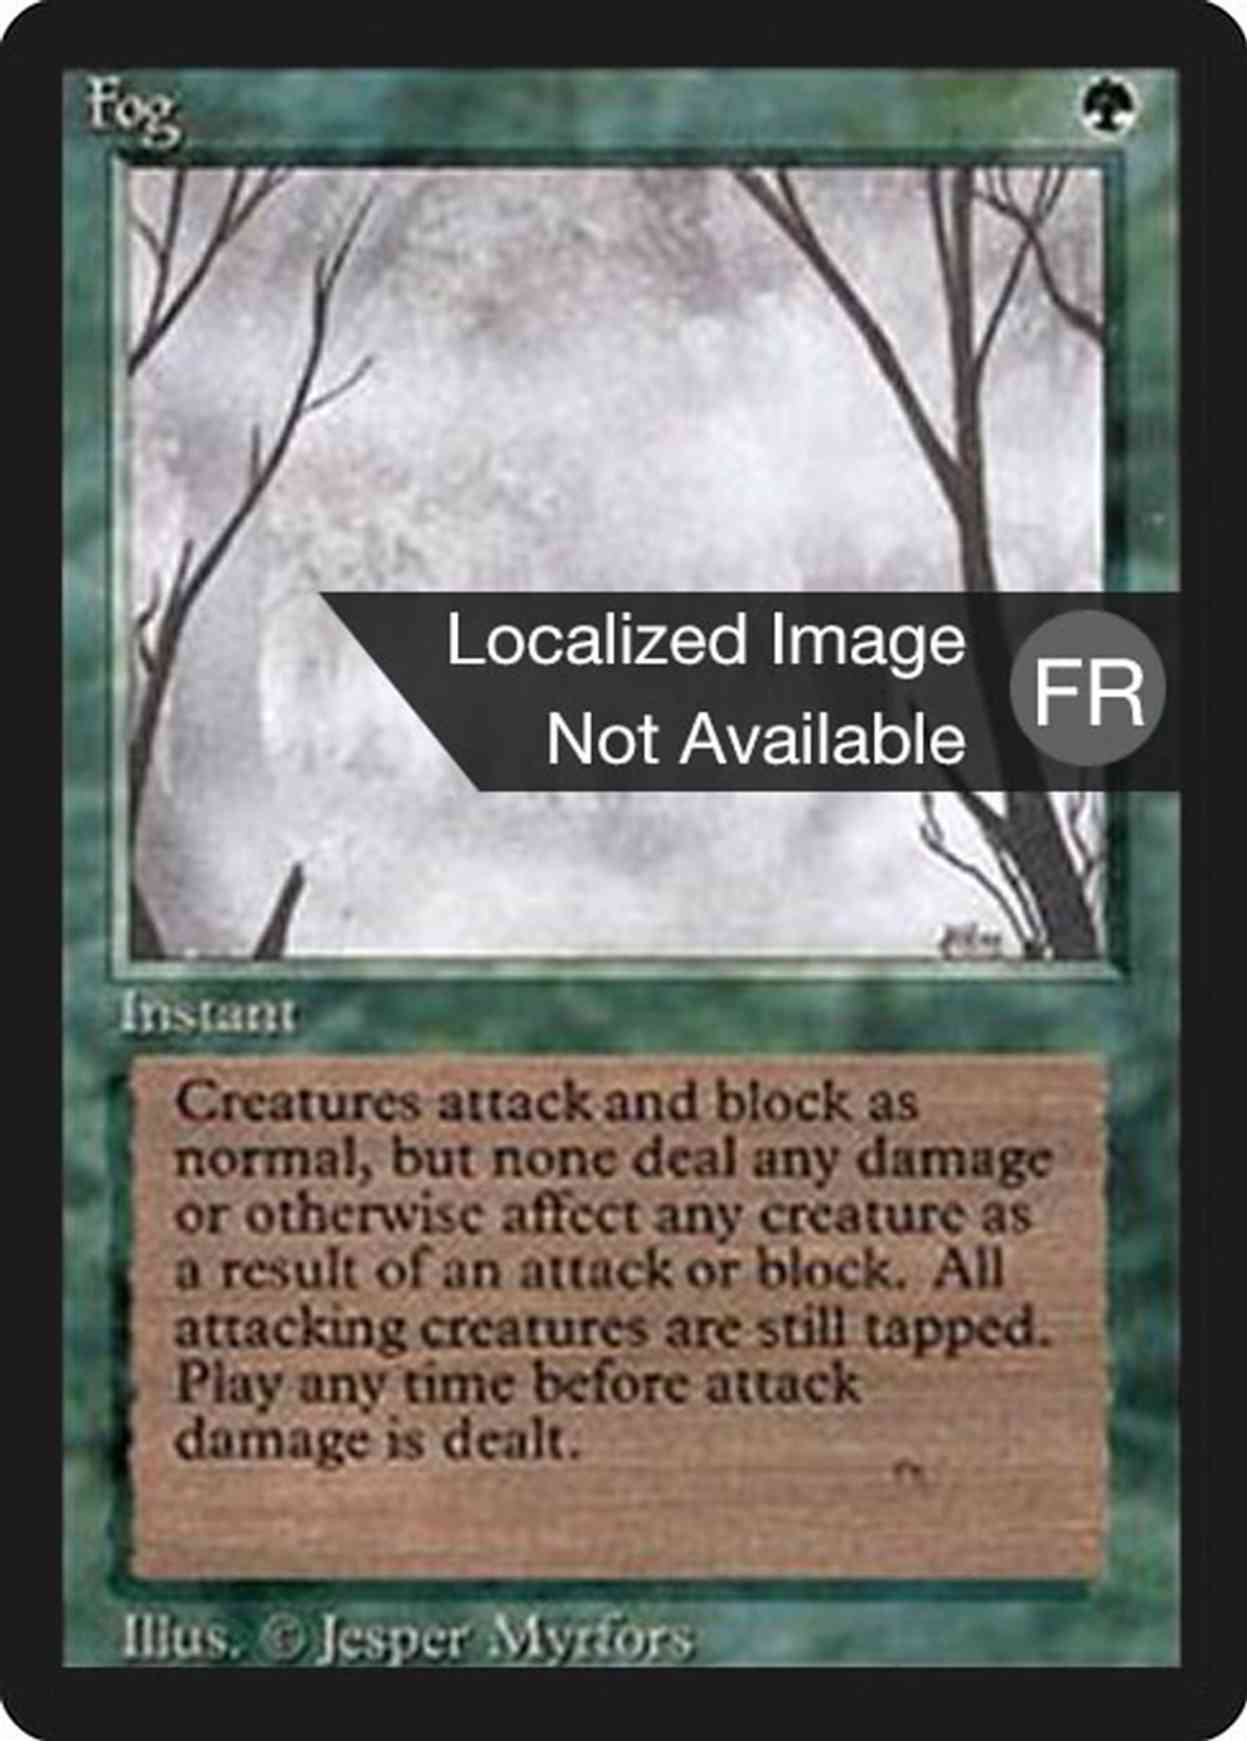 Fog magic card front